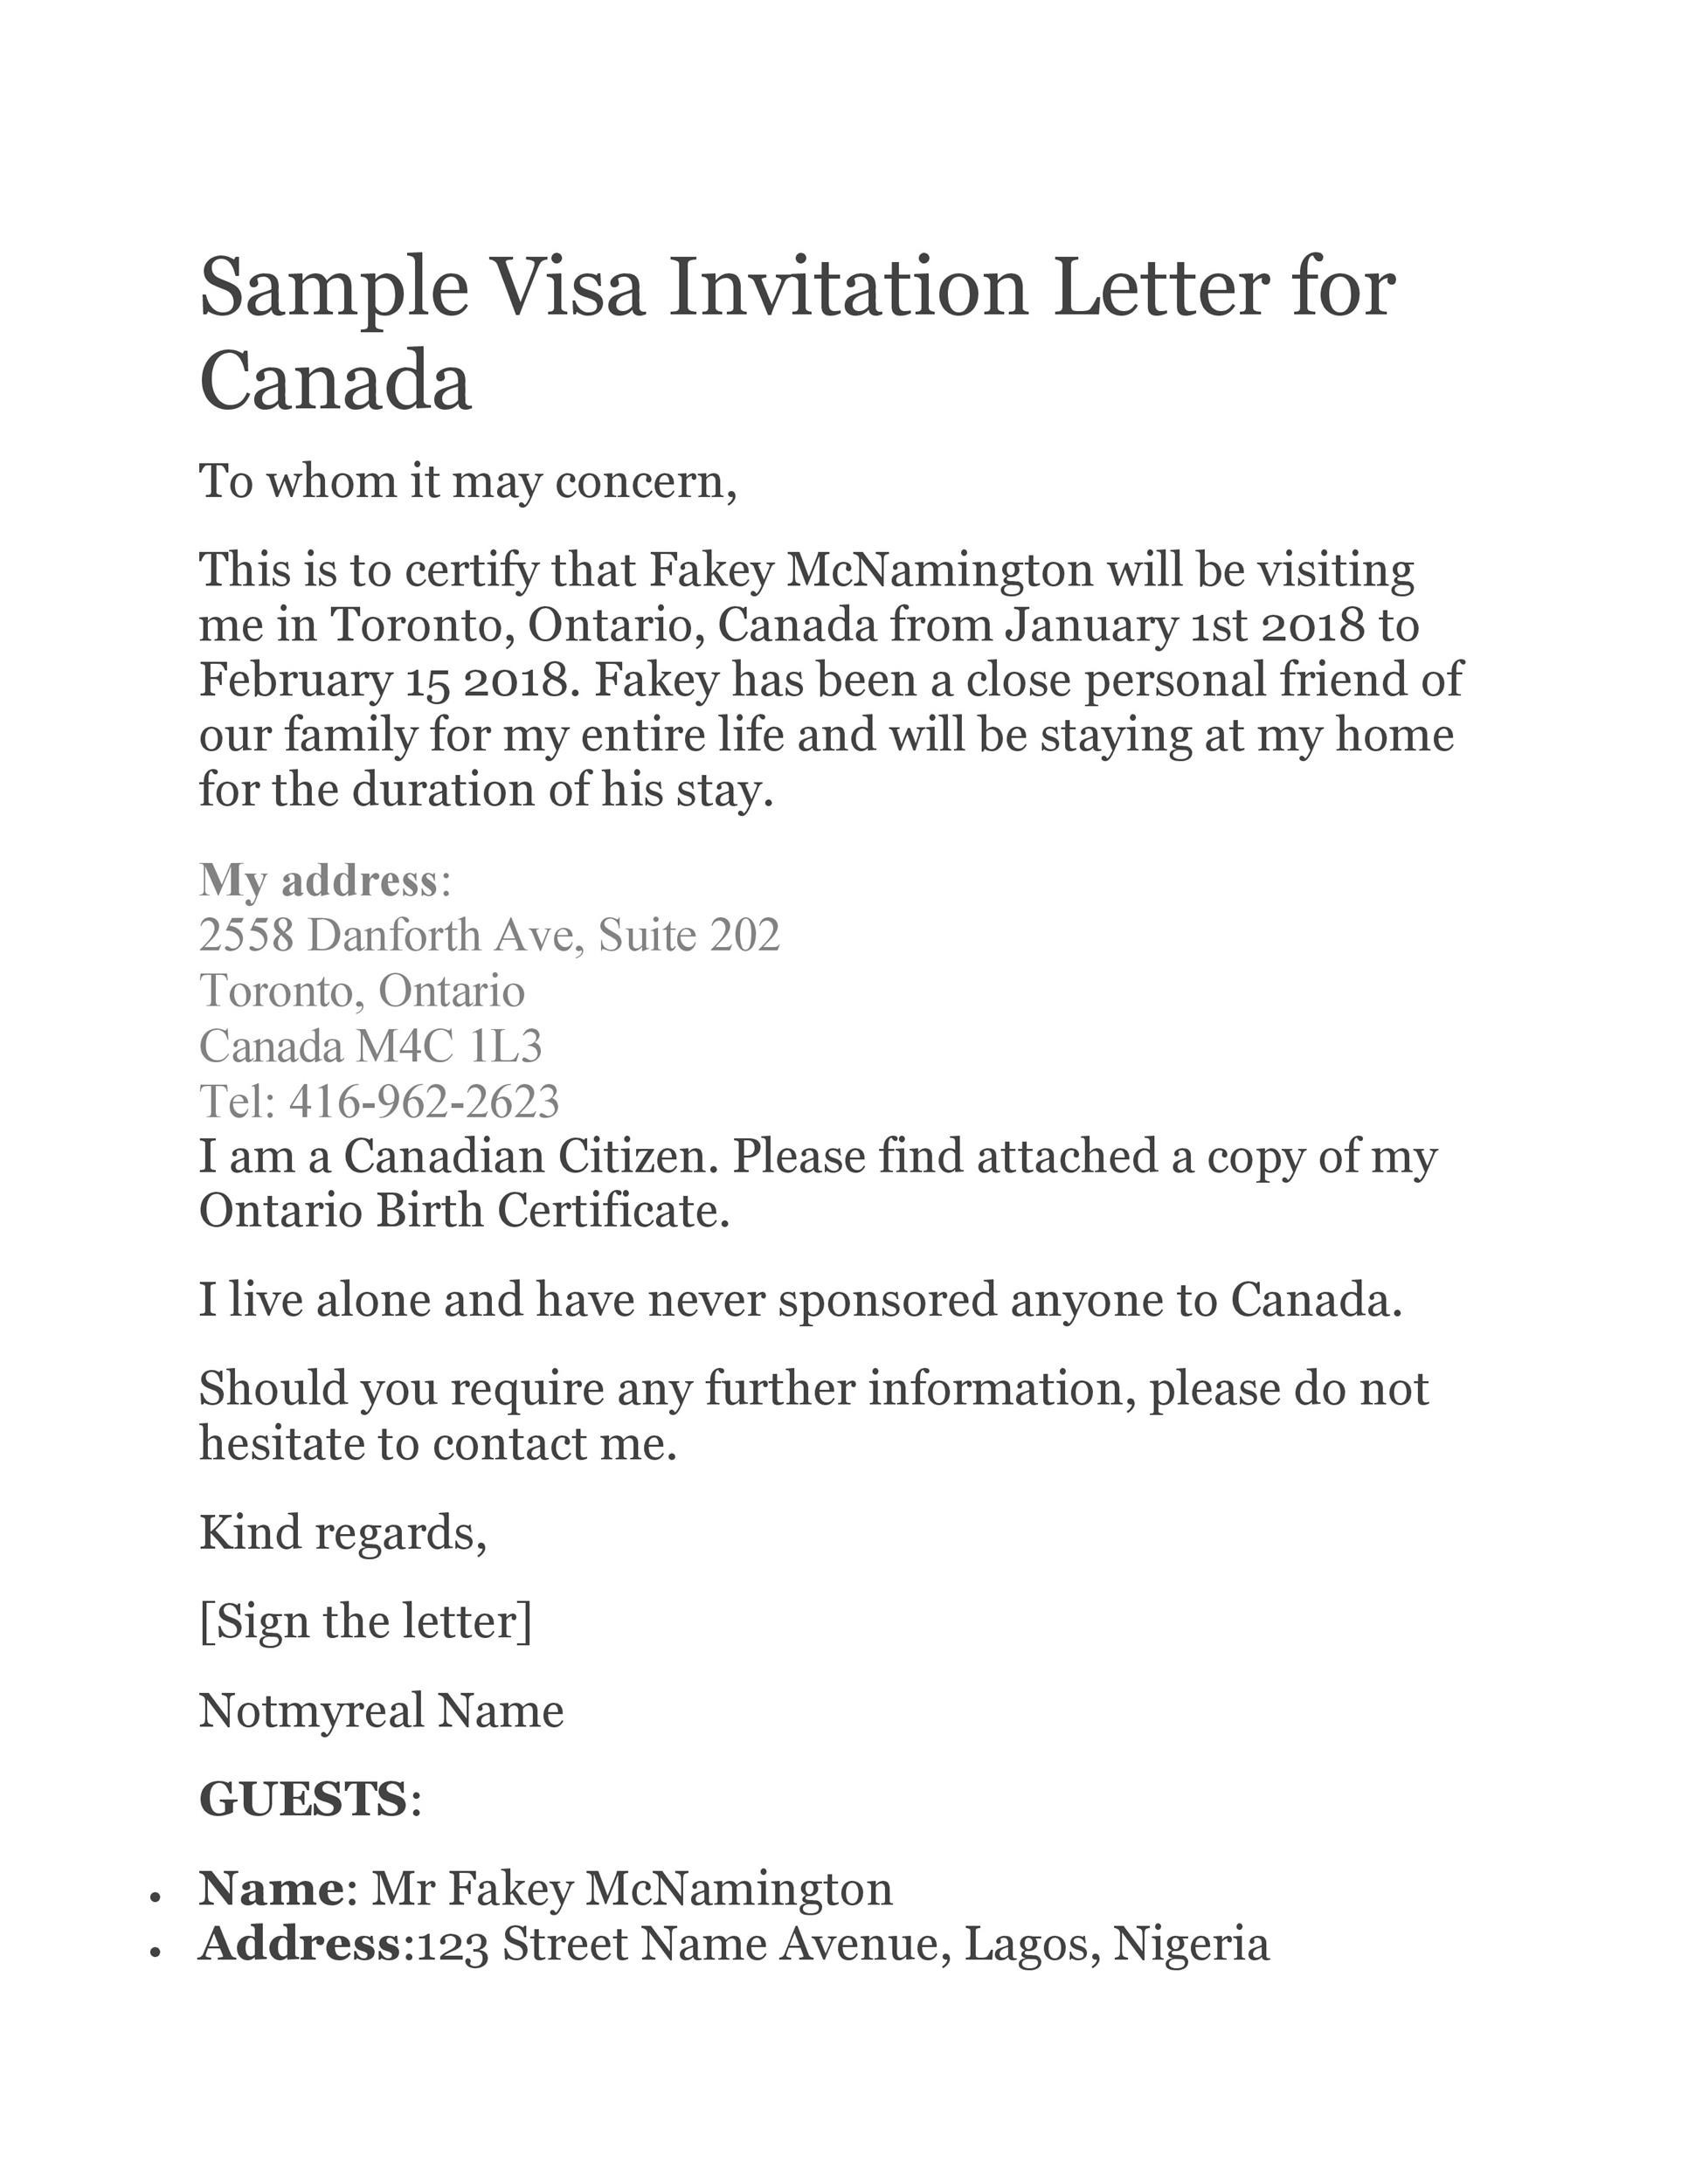 us tourist visa invitation letter